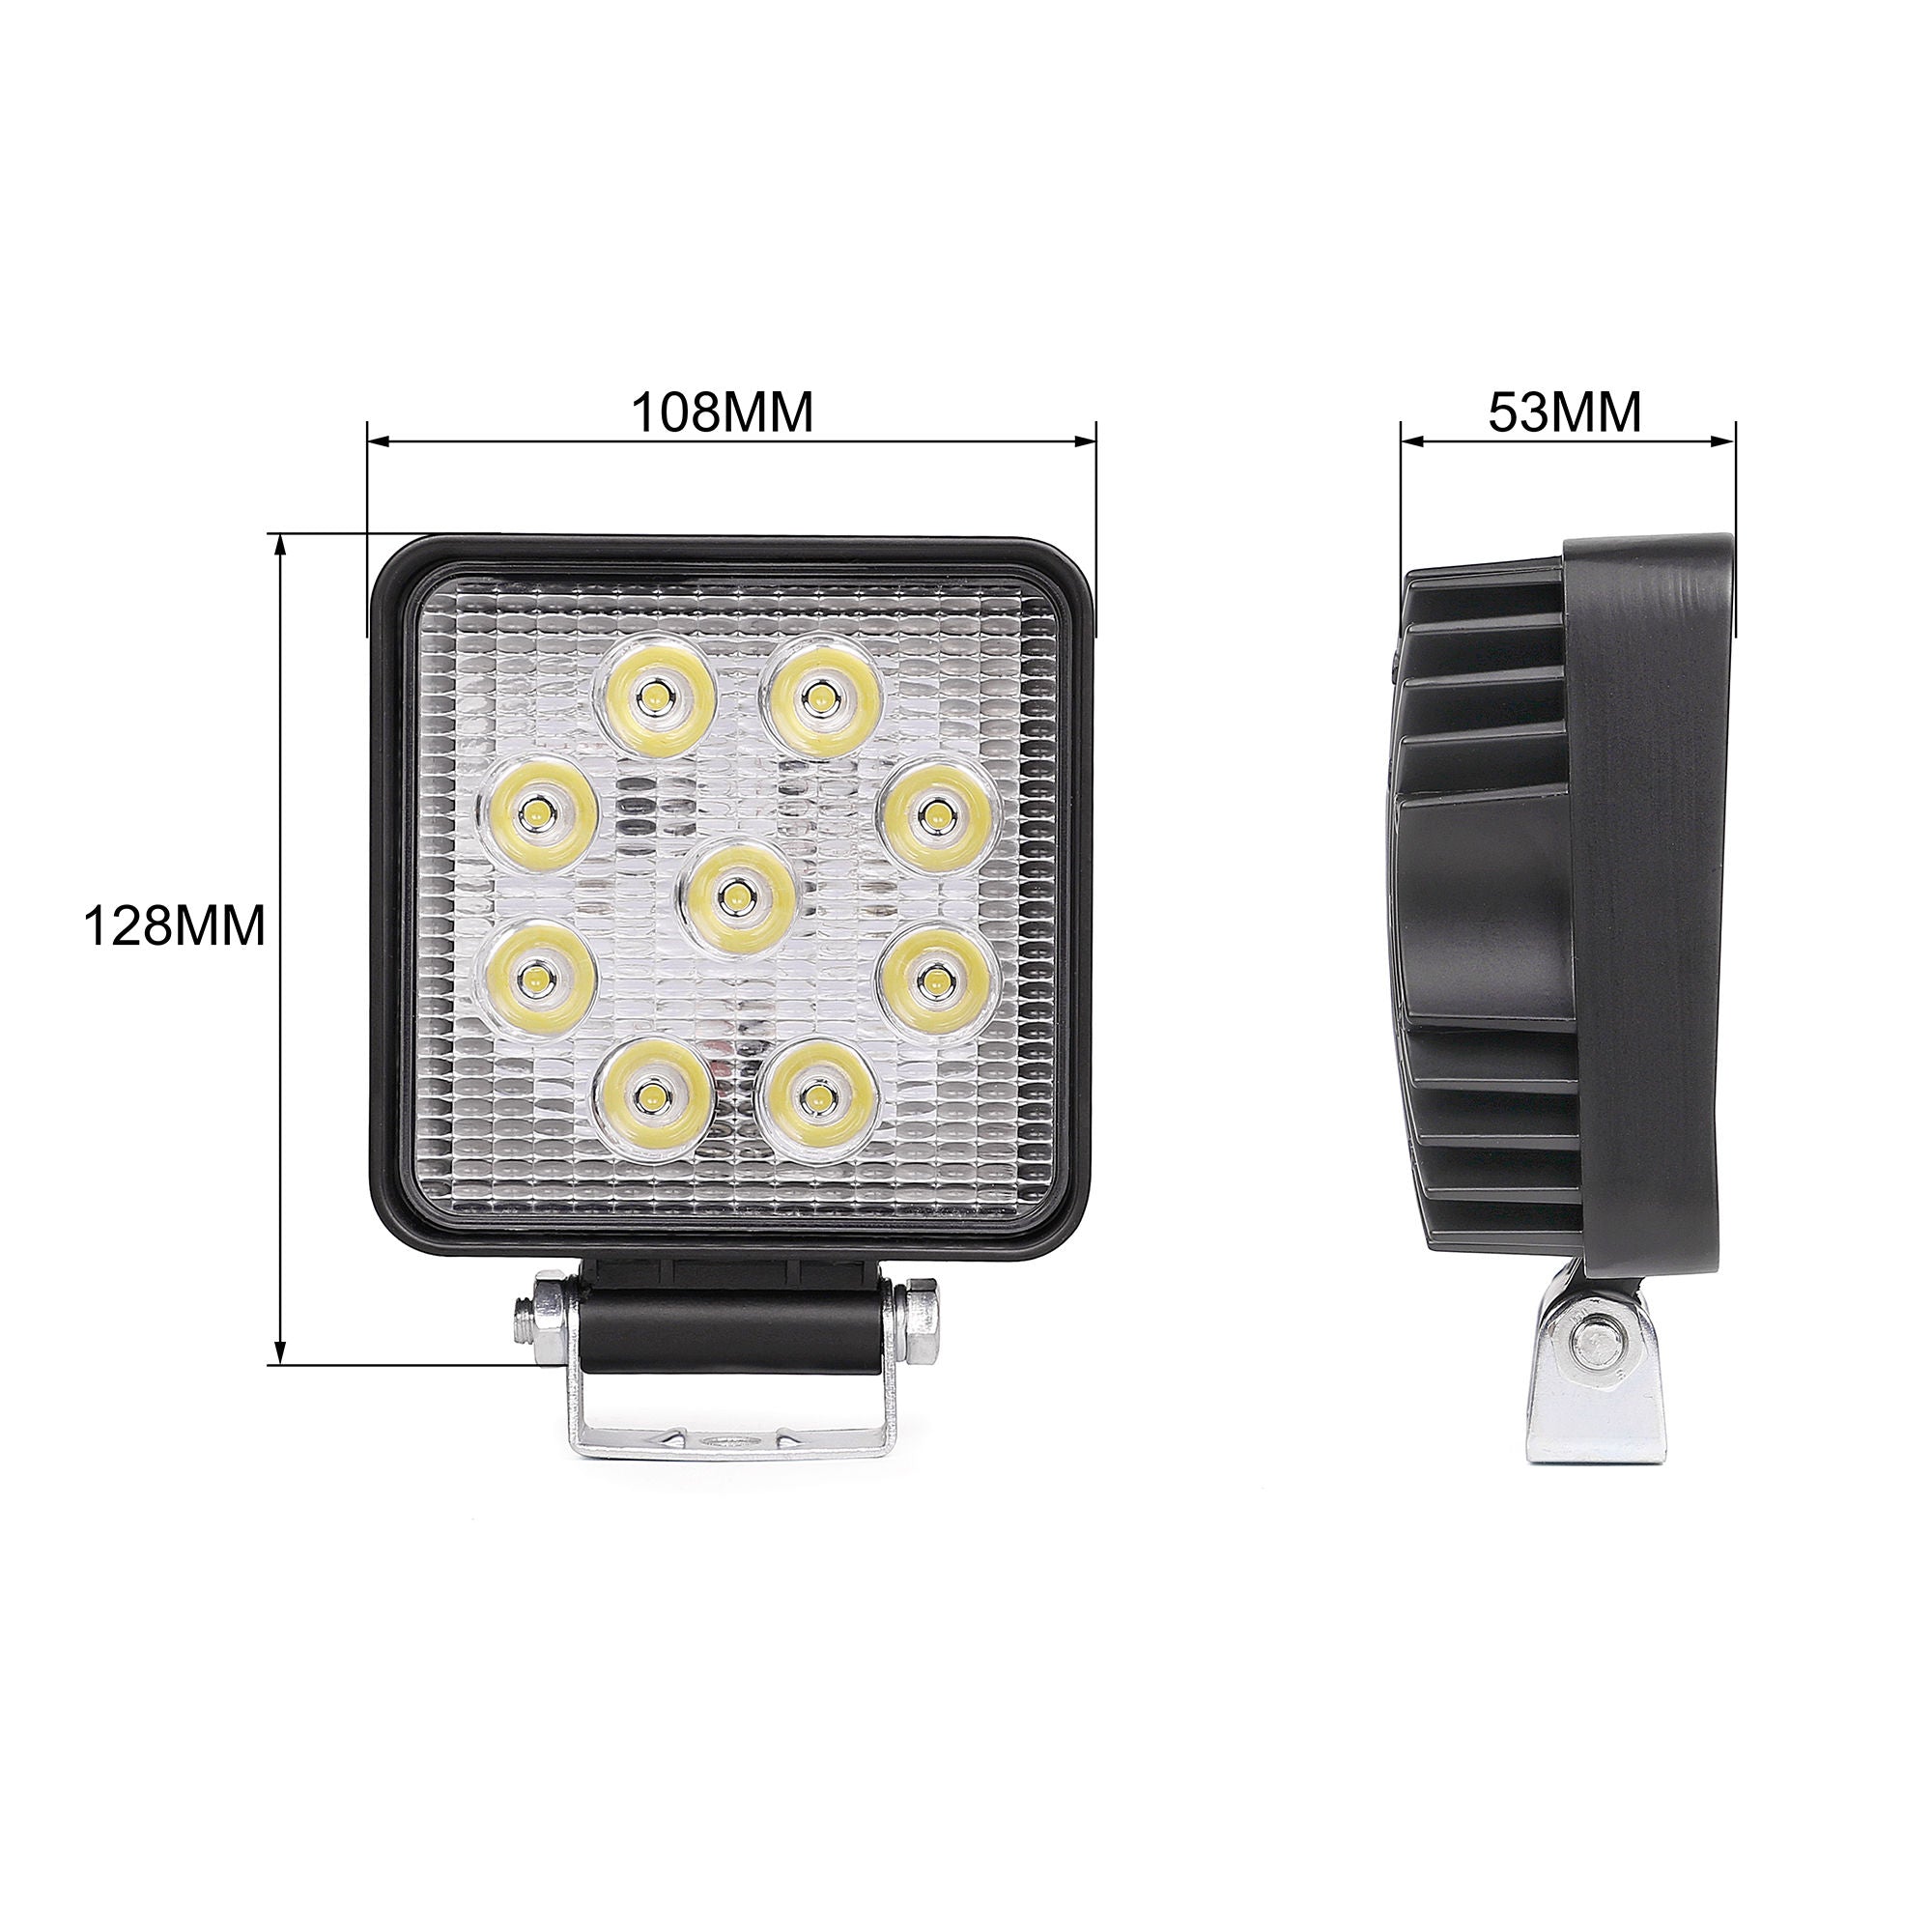 CLD CLDWL03 - 4.3" LED Work Light - Square Spot Beam (1100 Lumens)